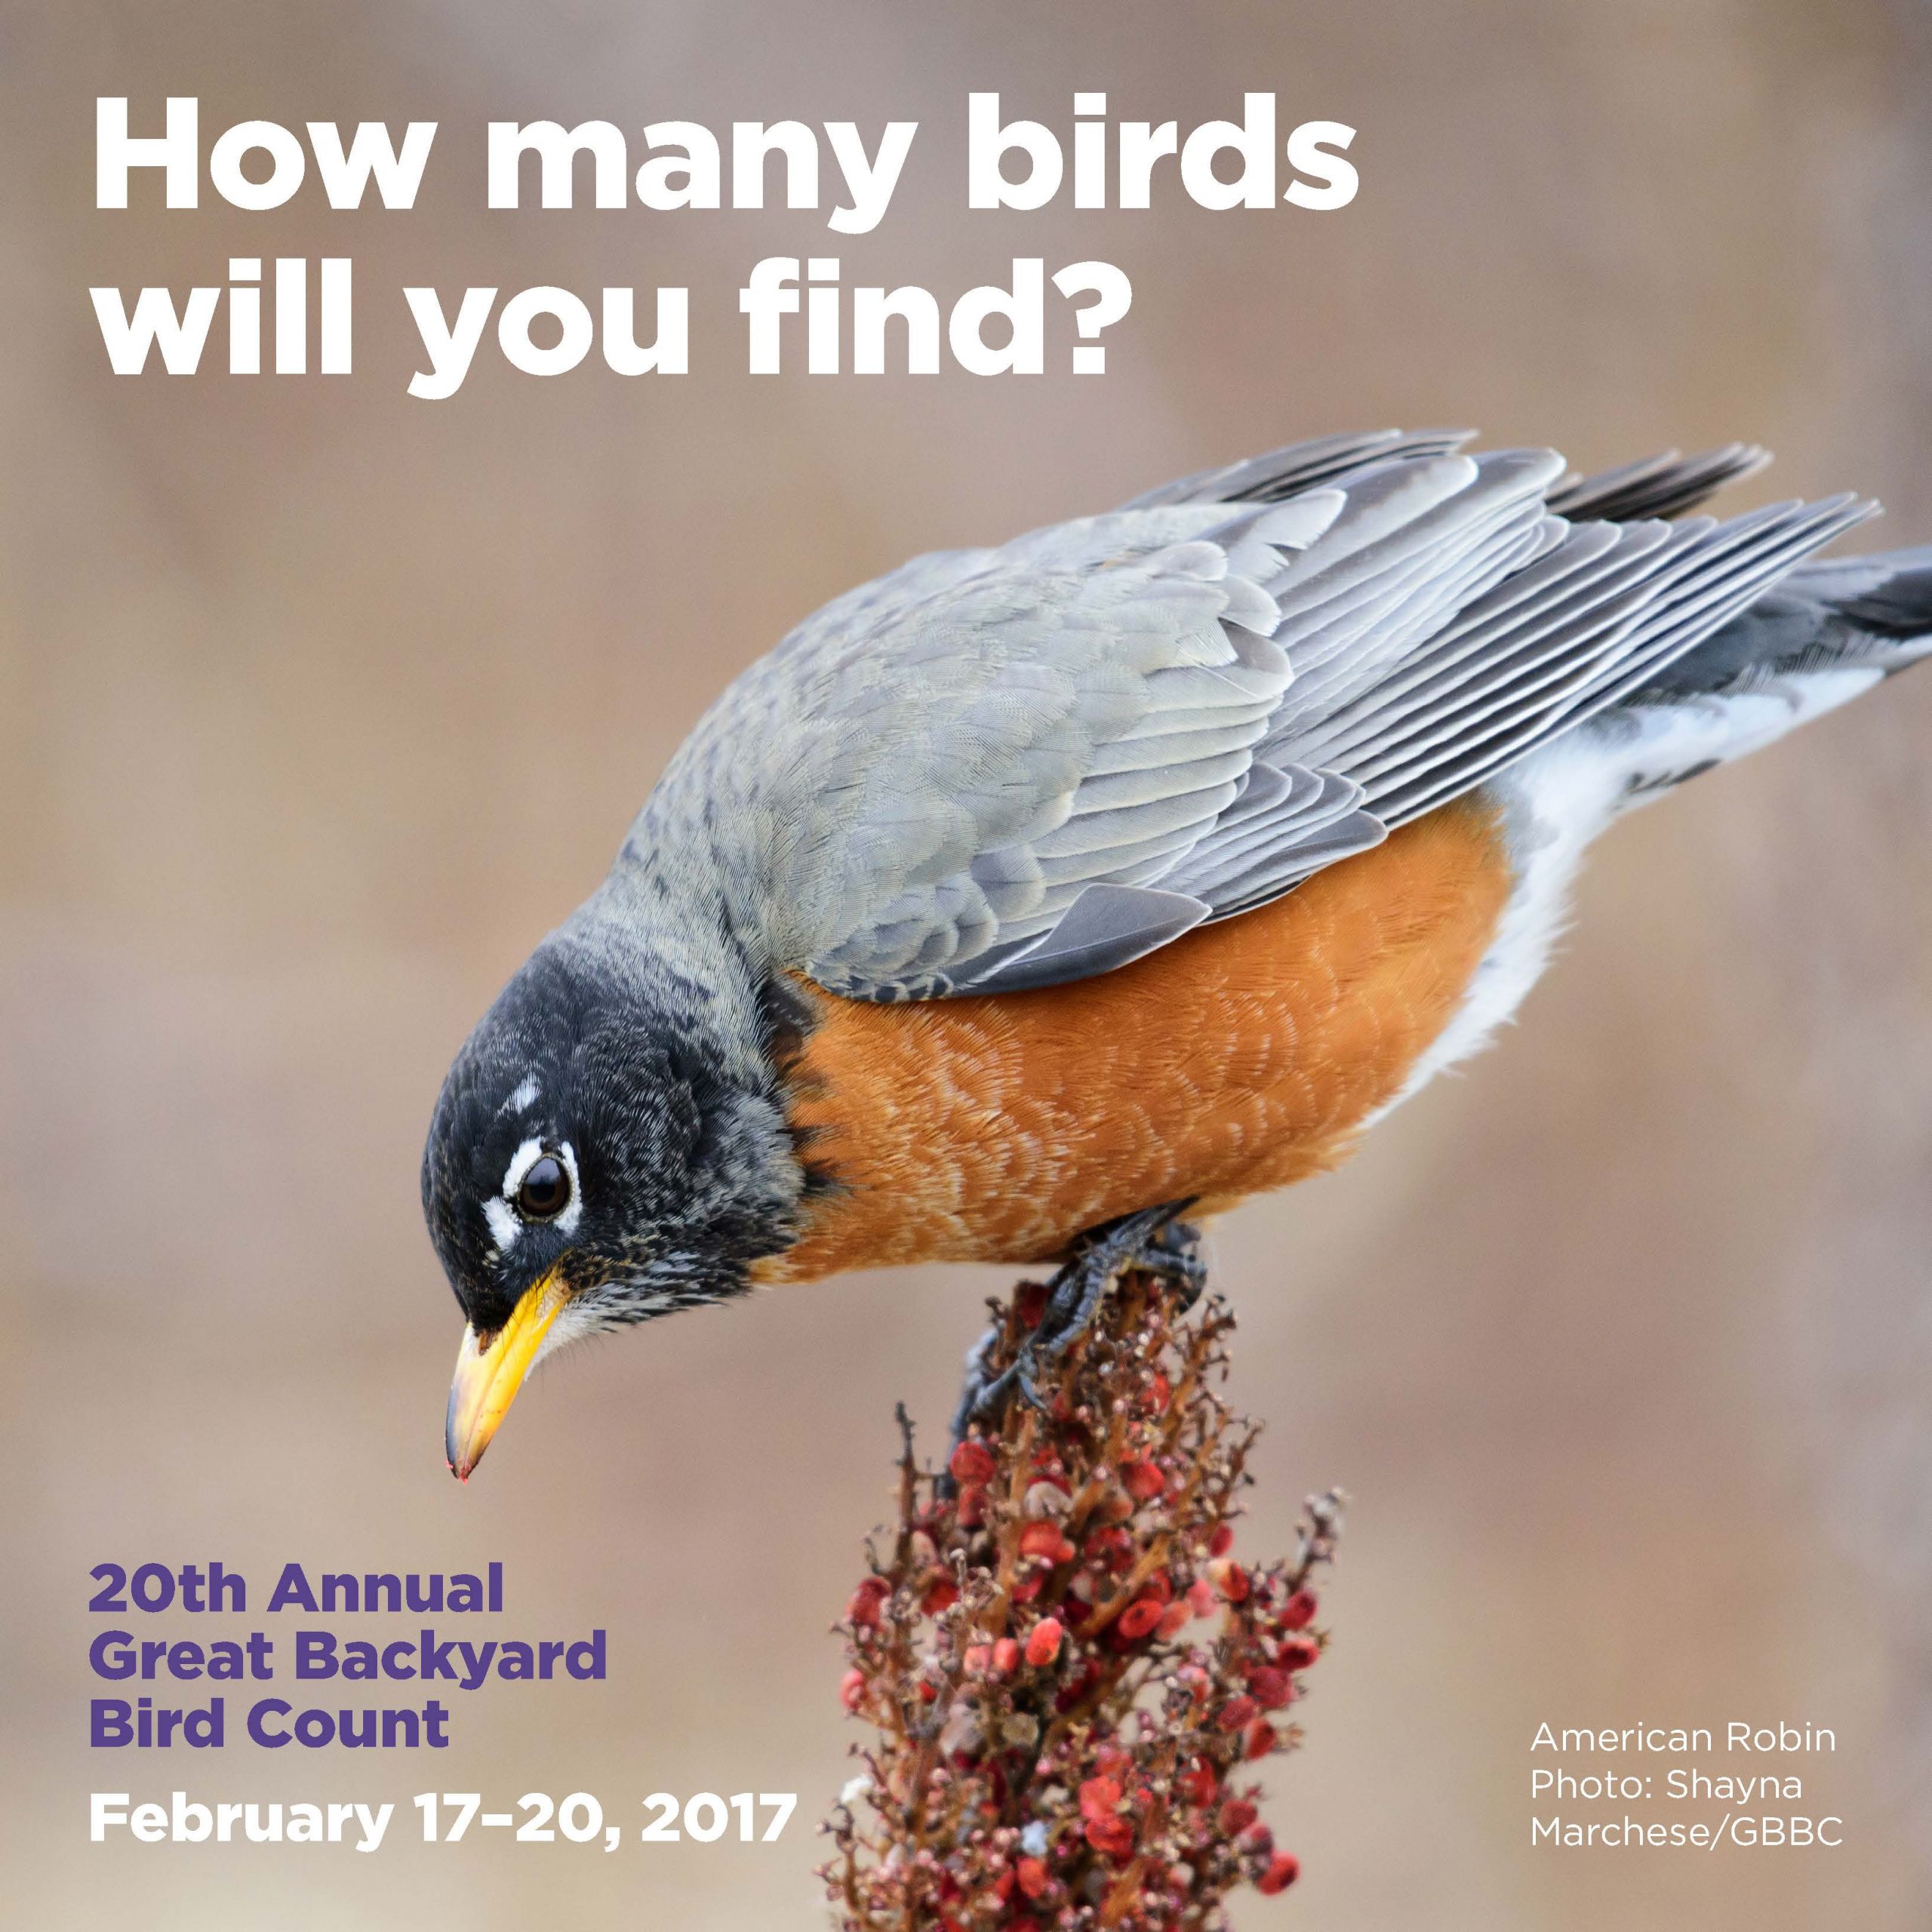 Great Backyard Bird Count
 The Great Backyard Bird Count 2017